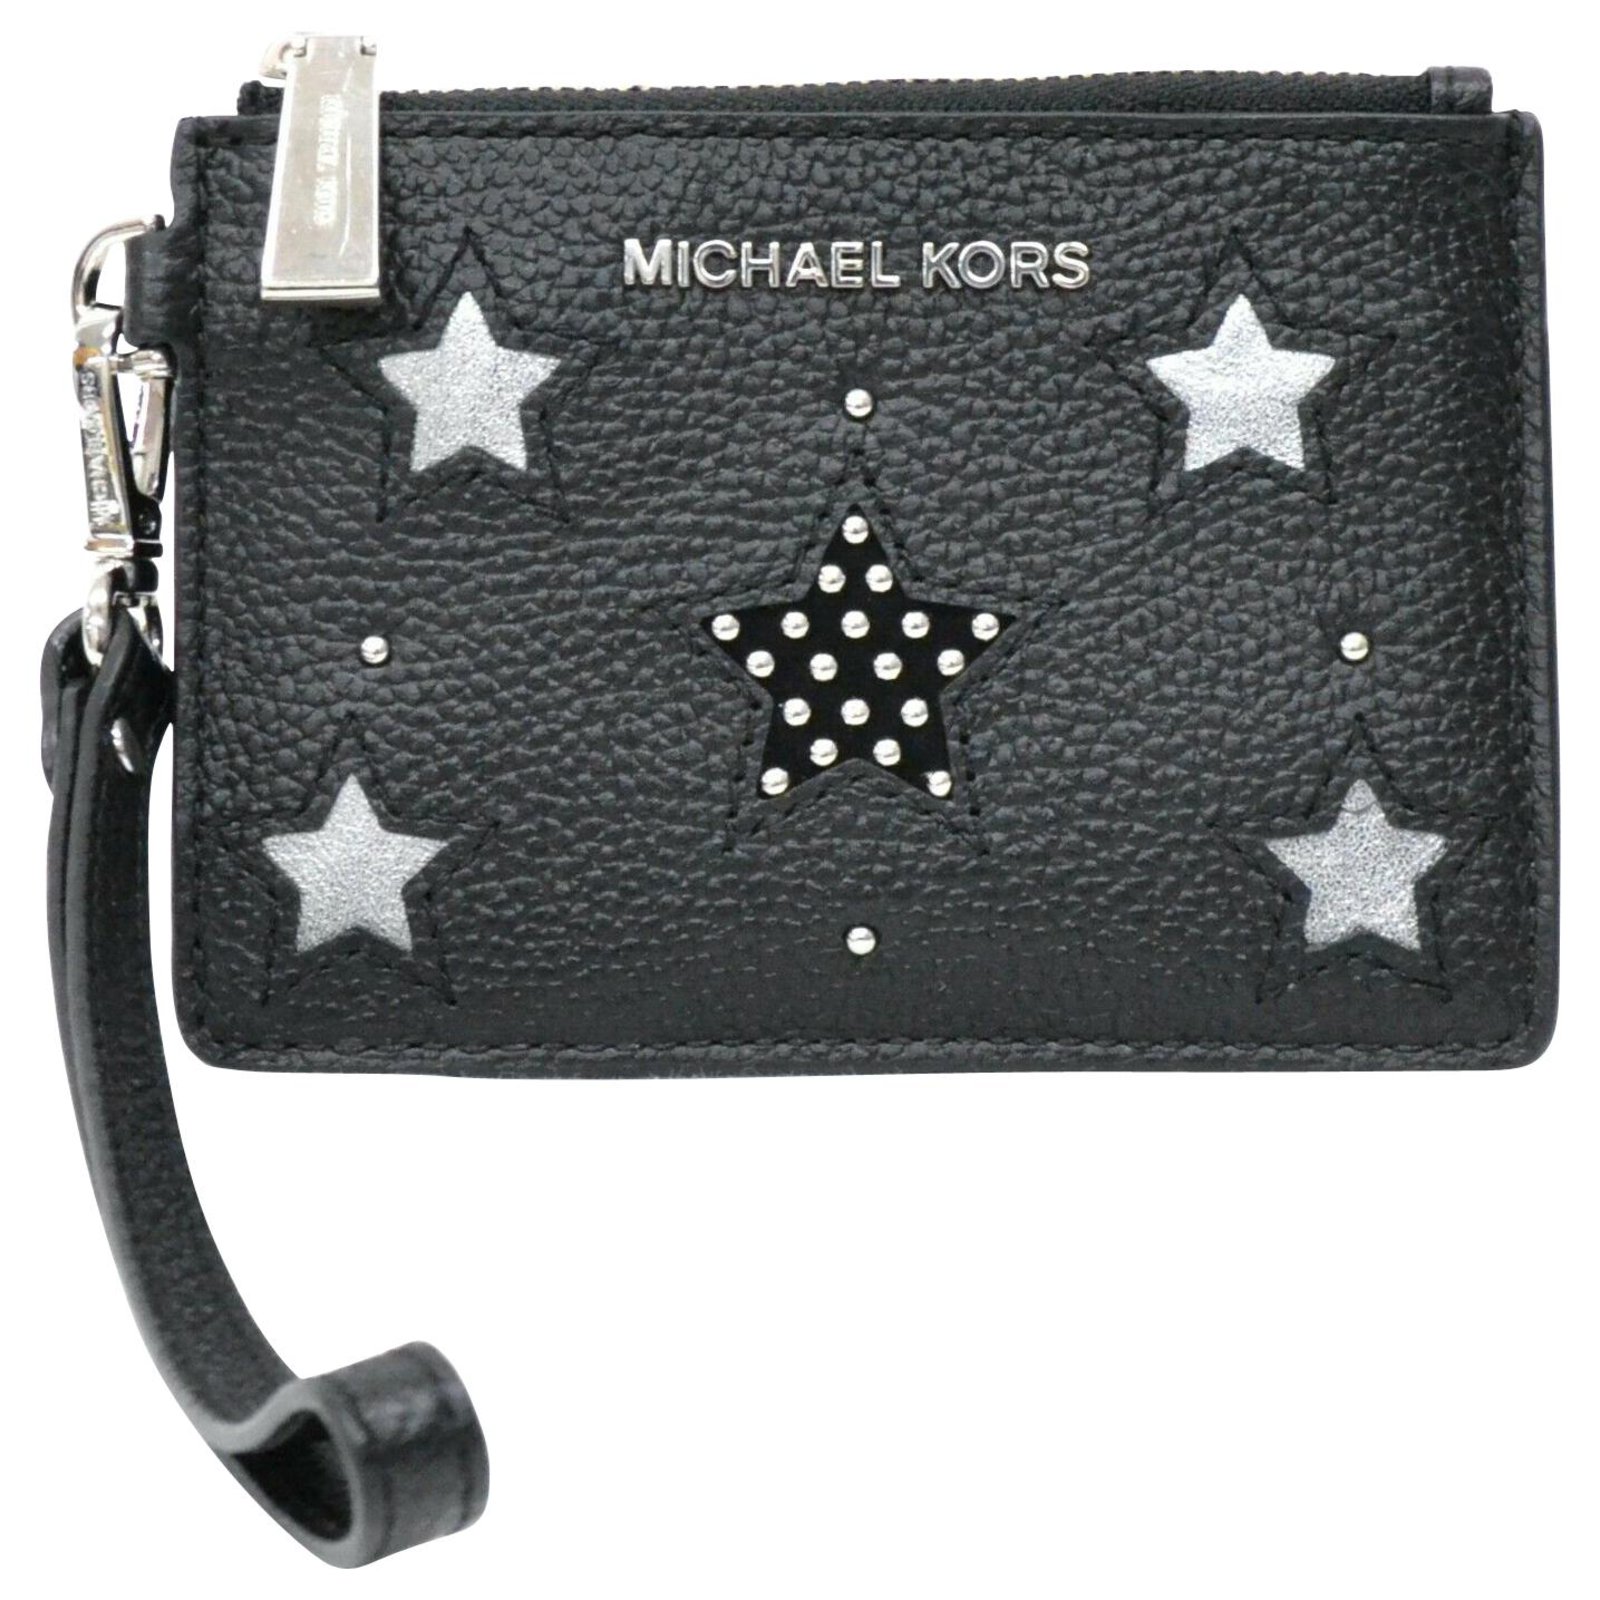 michael kors purses and wallets